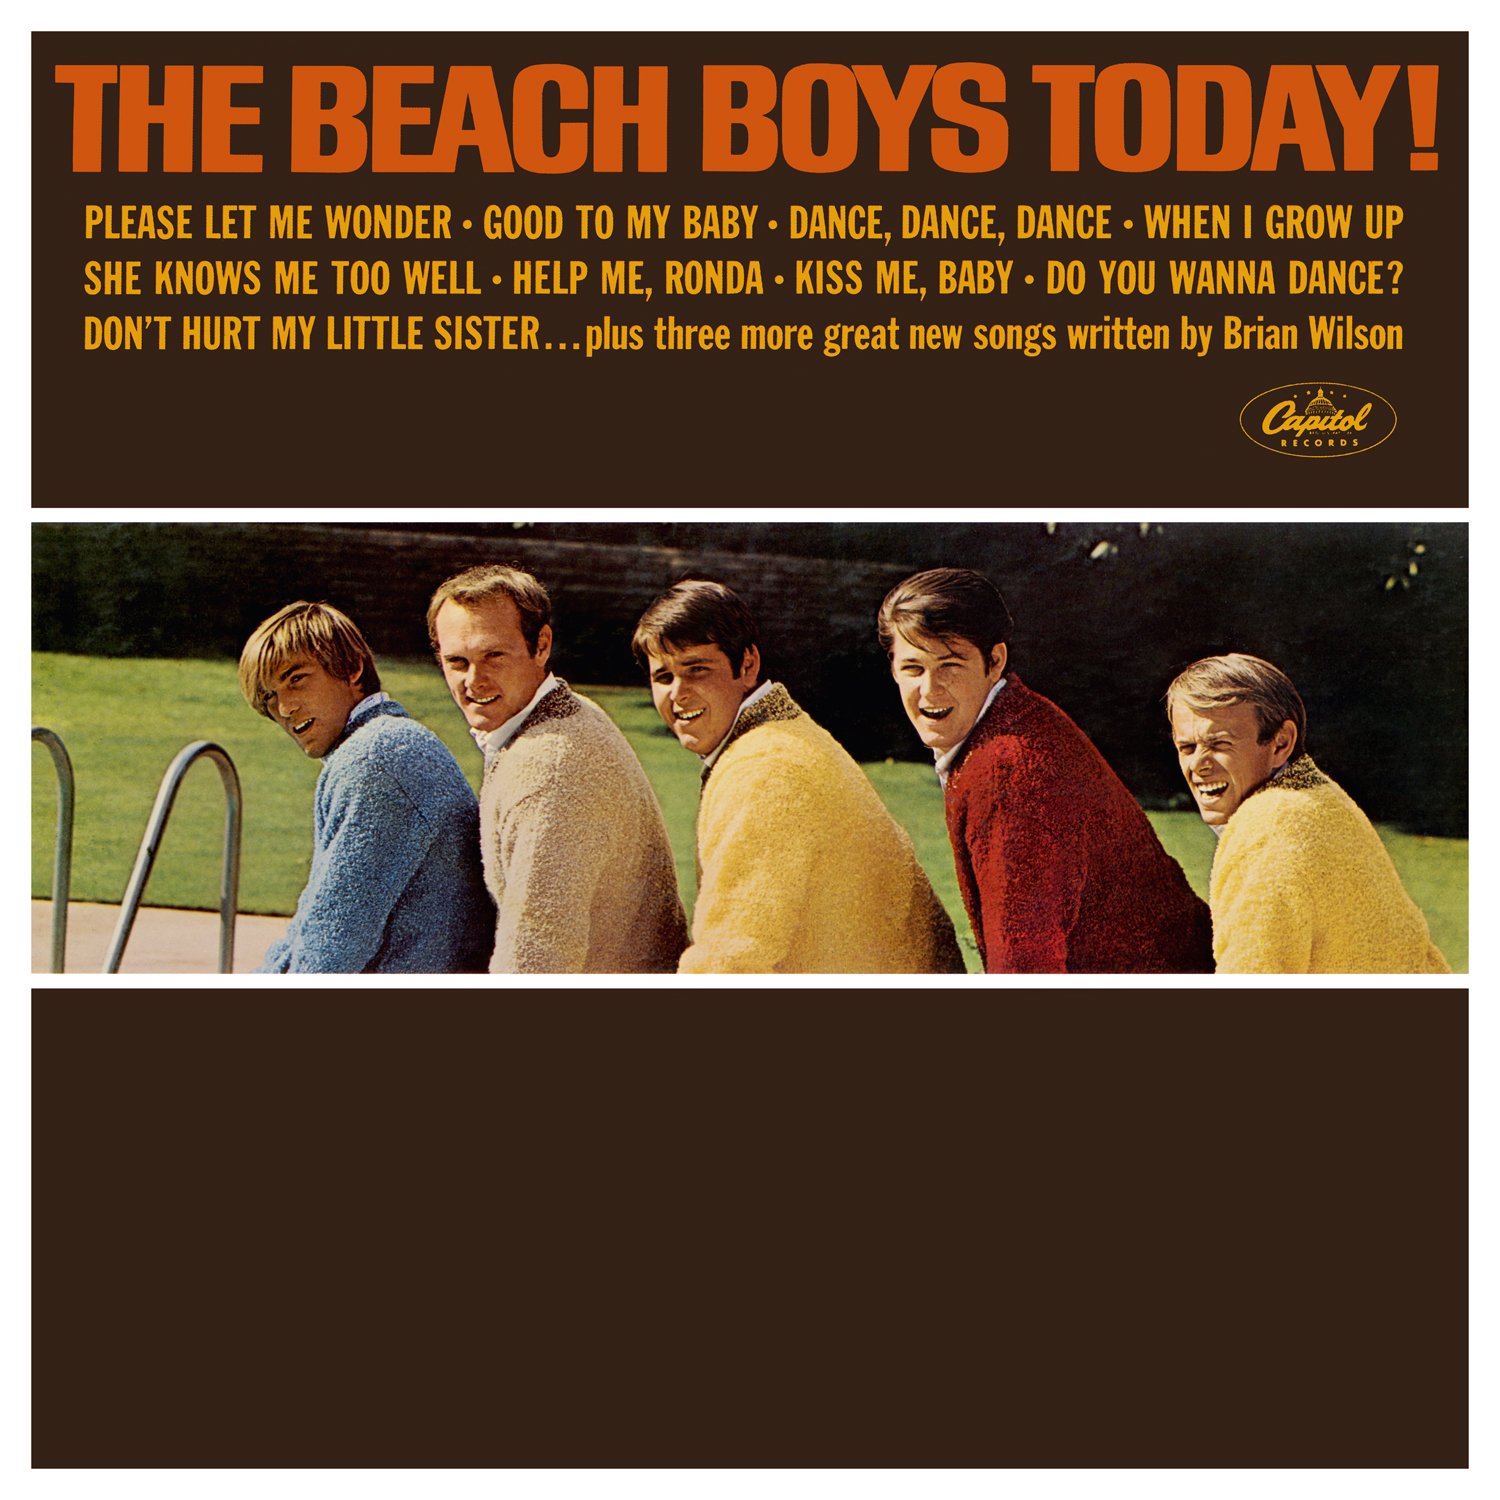 The Beach Boys-The Beach Boys Today-24-192-WEB-FLAC-REMASTERED DELUXE EDITION-2015-OBZEN